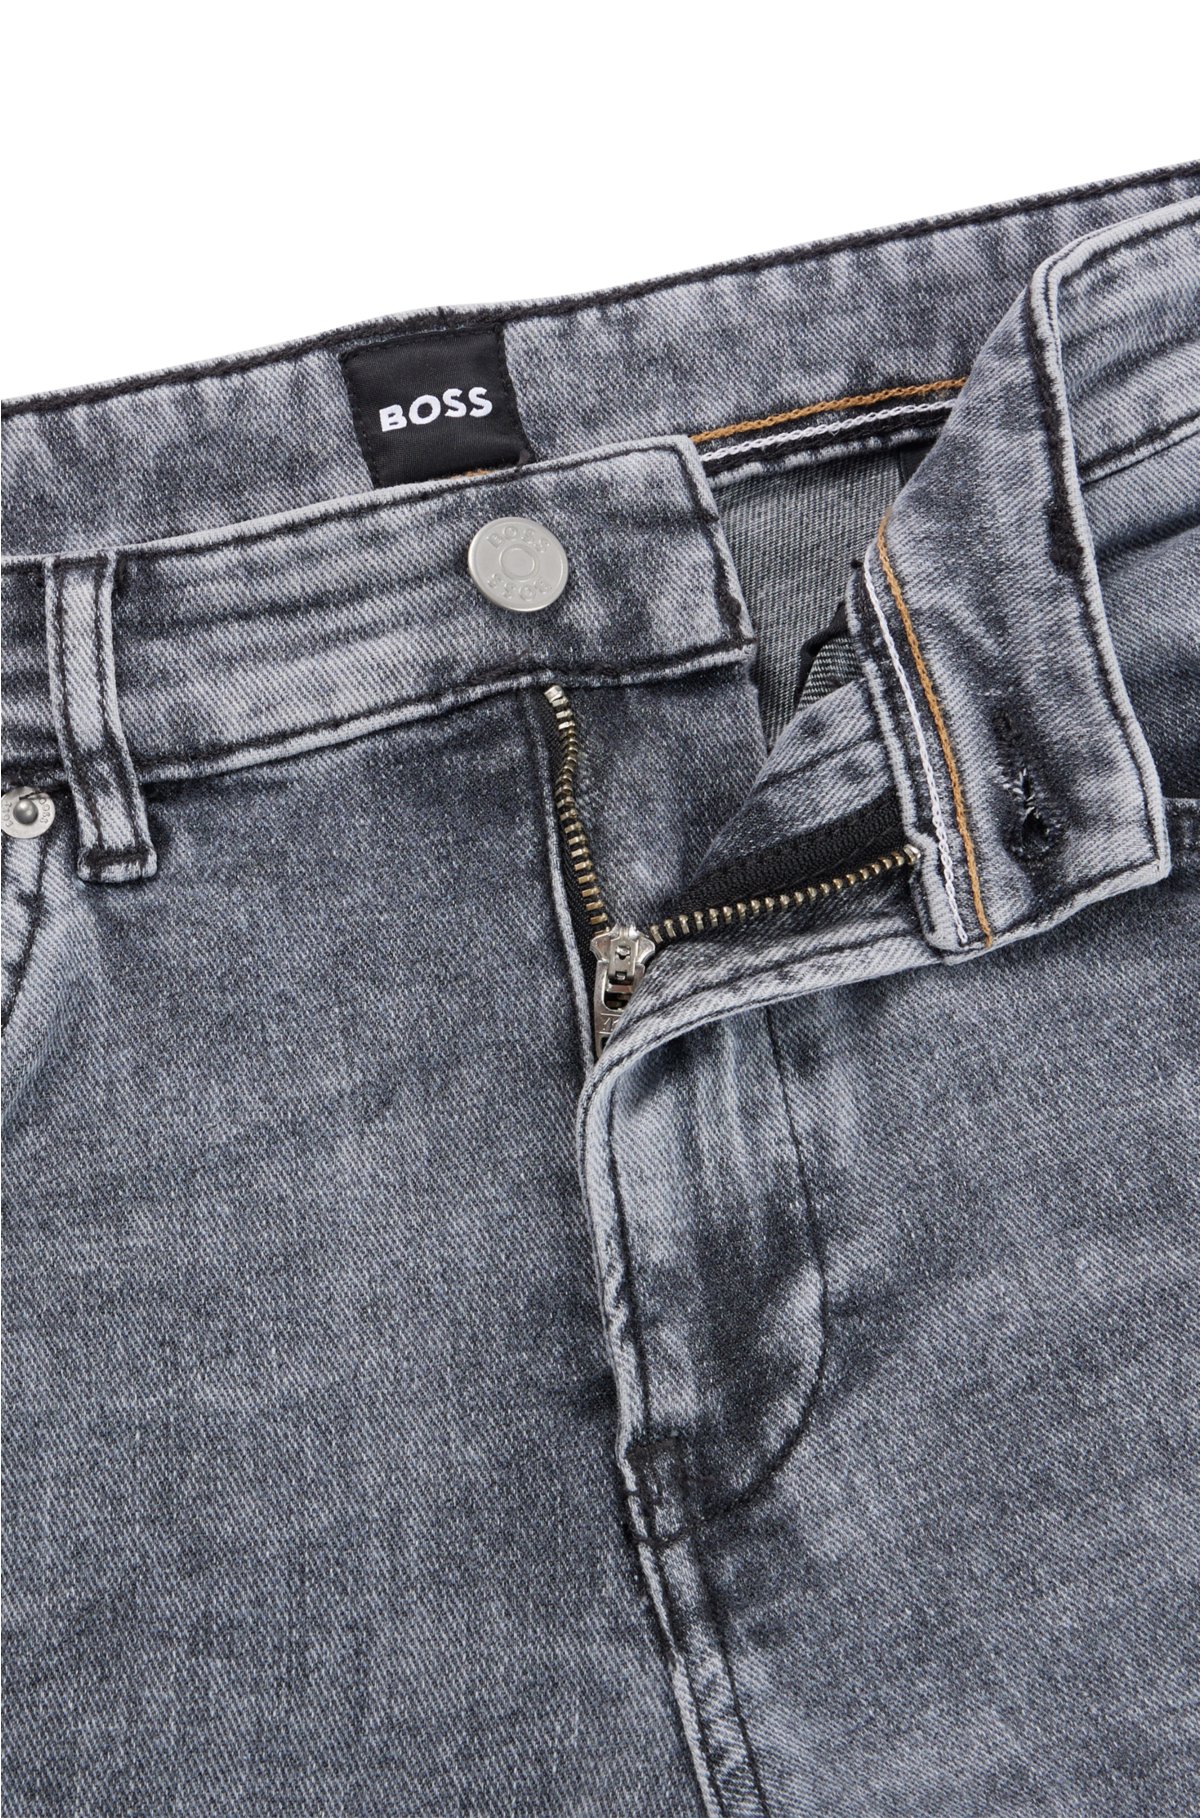 BOSS in jeans - gray stonewashed Italian Slim-fit denim stretch